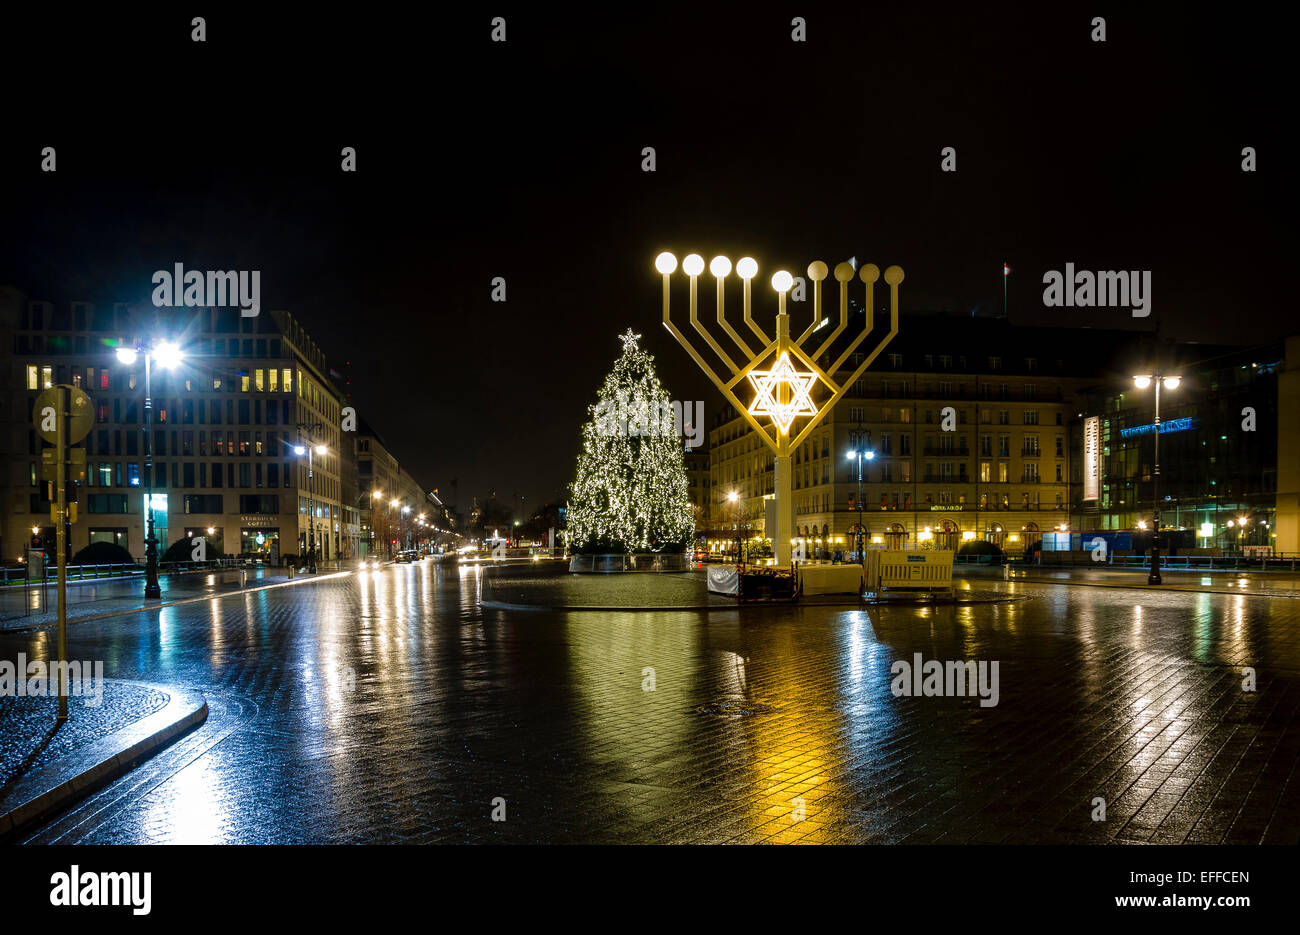 Deutschland, Berlin, giant Hanukkah Menorah nahe Brandenburger Tor bei Nacht  Stockfotografie - Alamy